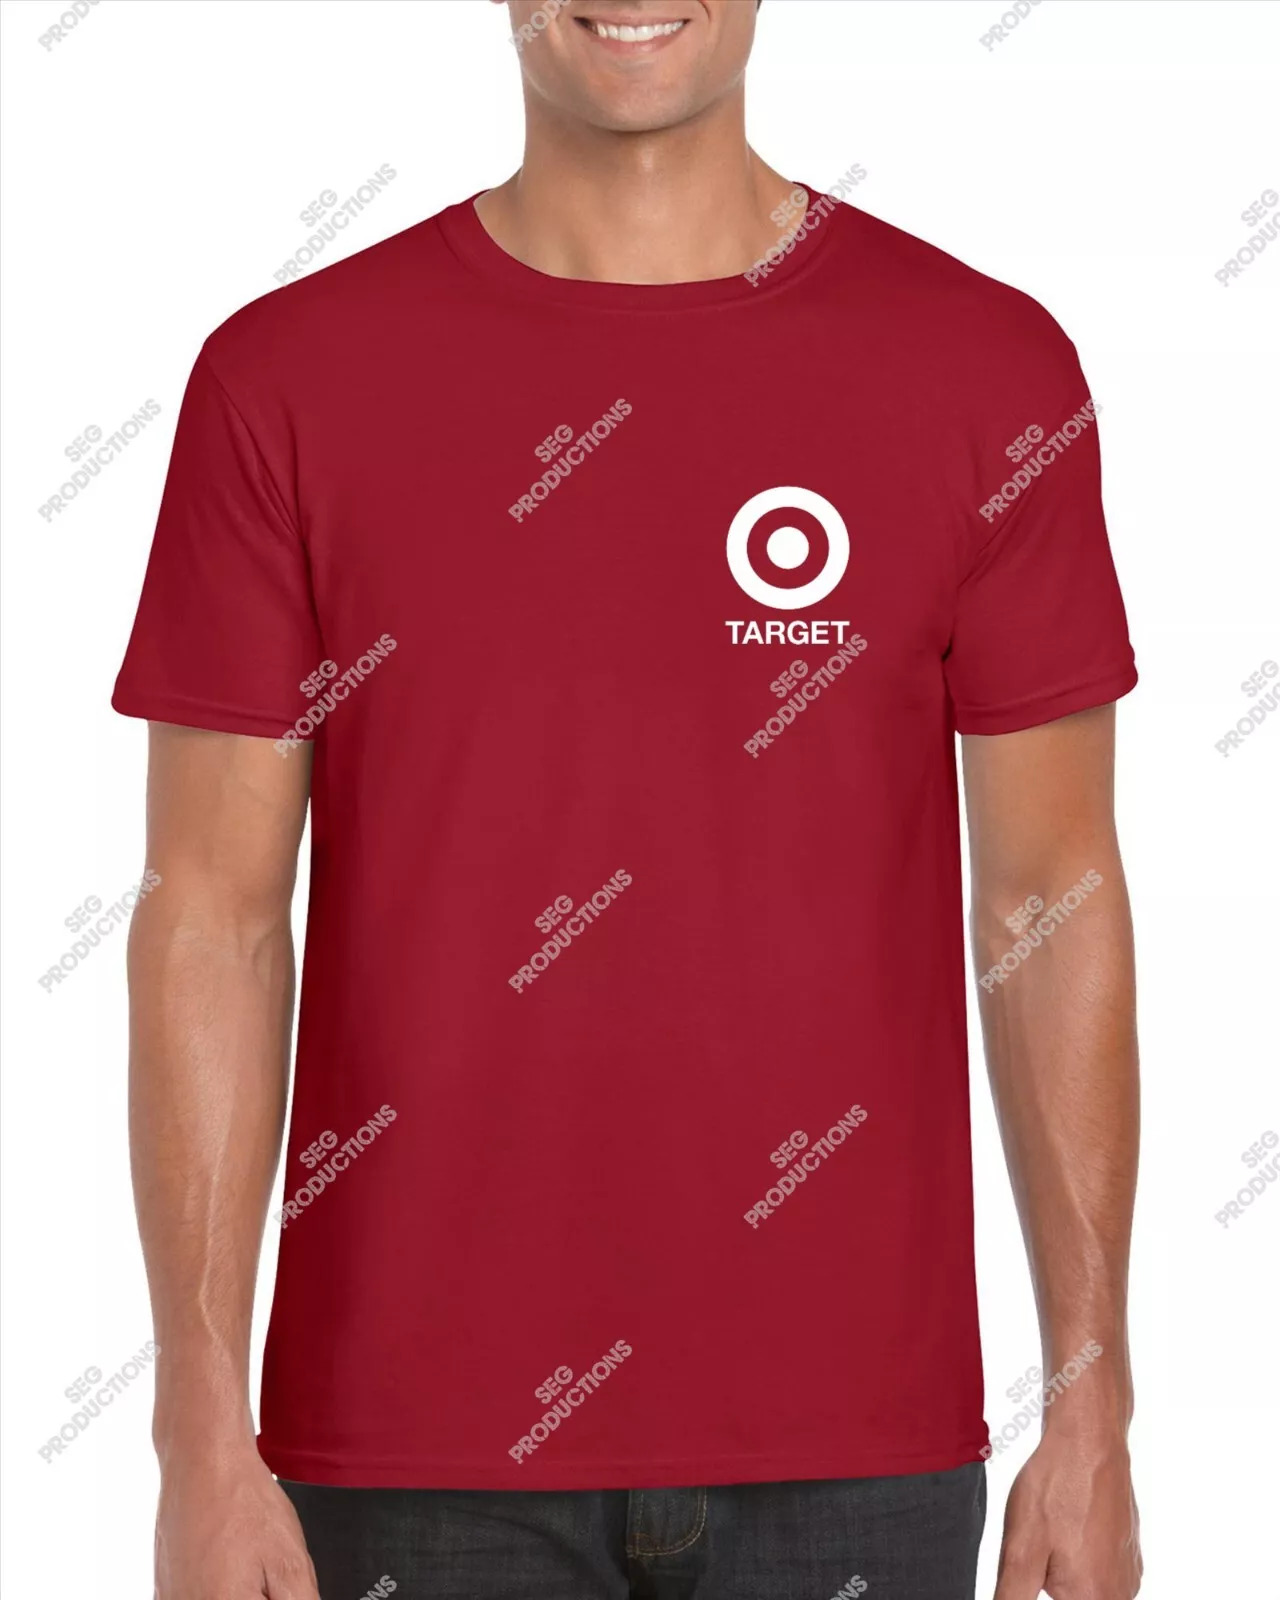 Target Tshirt, Target Store Employee Bullseye Team Member